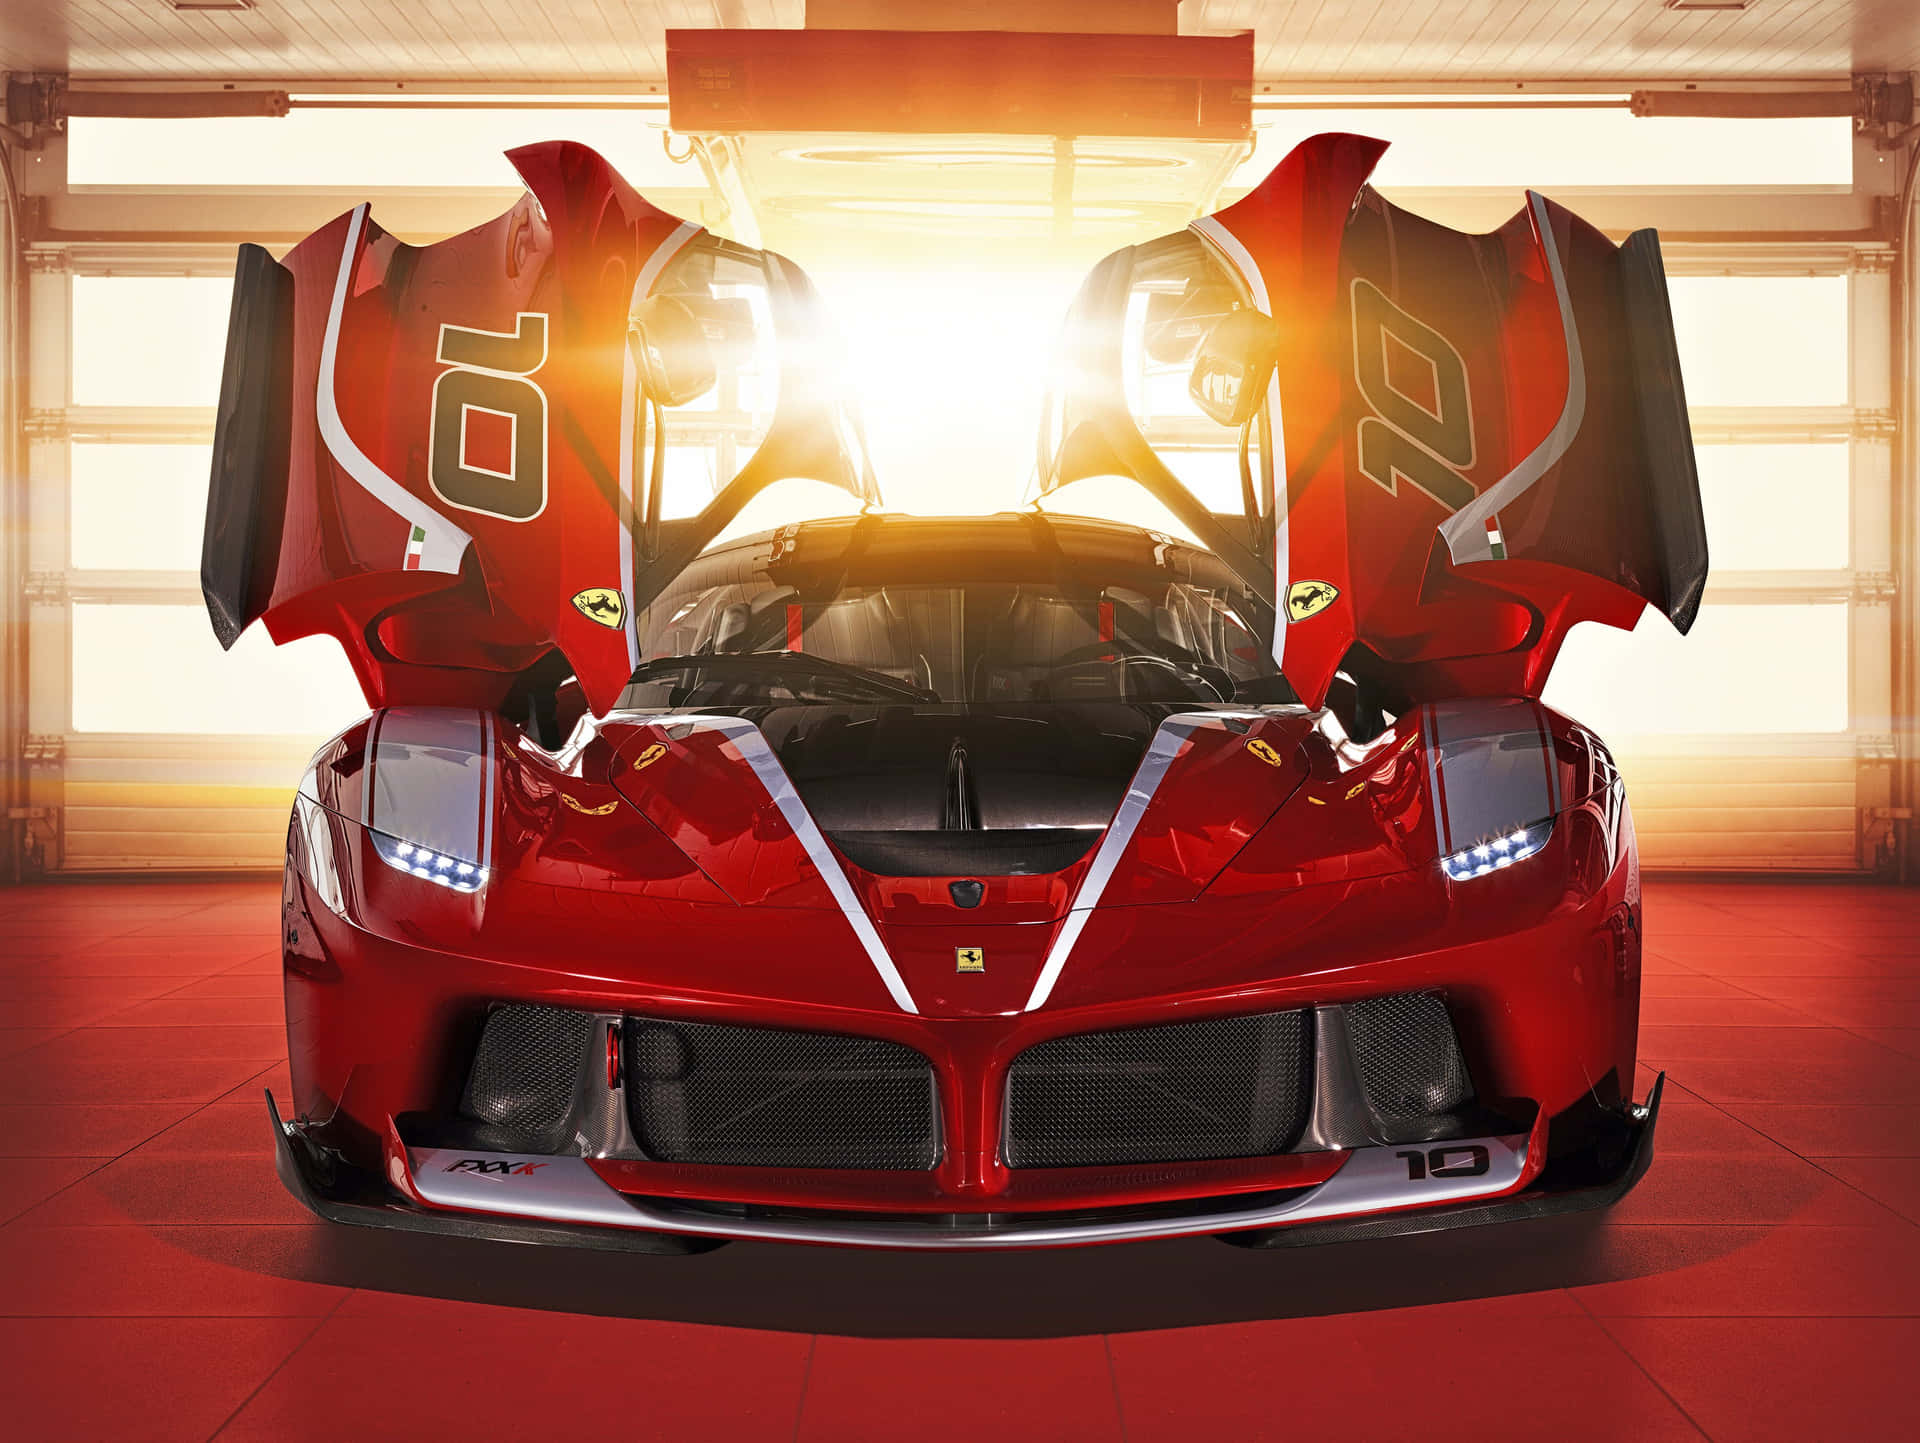 Experience the power of a 4K Ferrari